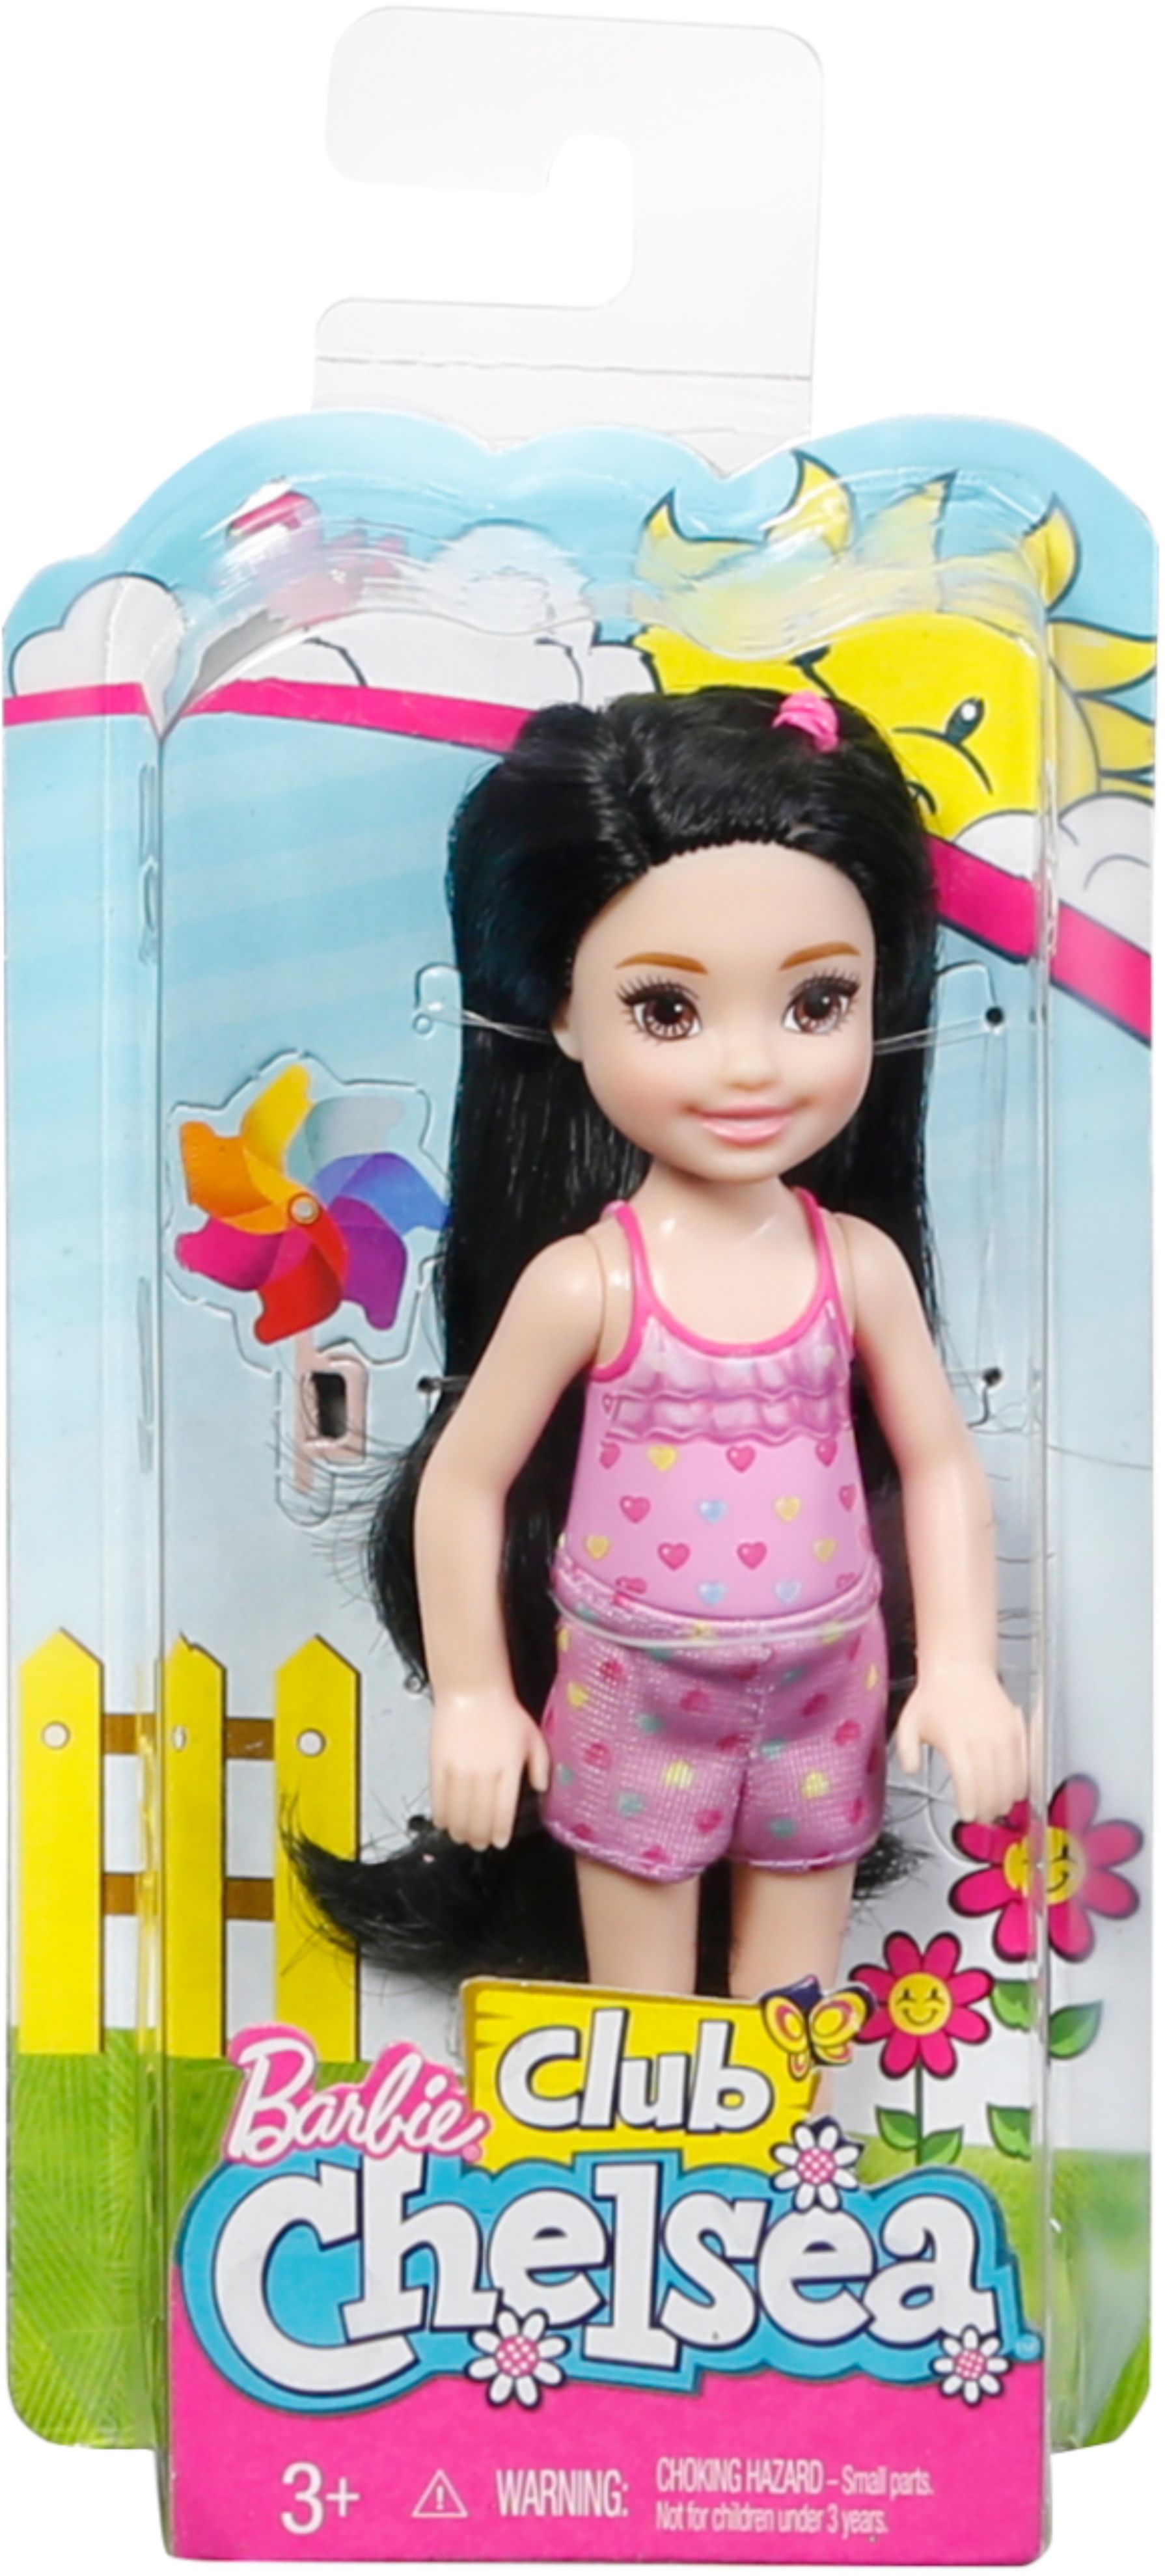 Customer Reviews Barbie Club Chelsea Doll Styles May Vary DWJ33 Best Buy